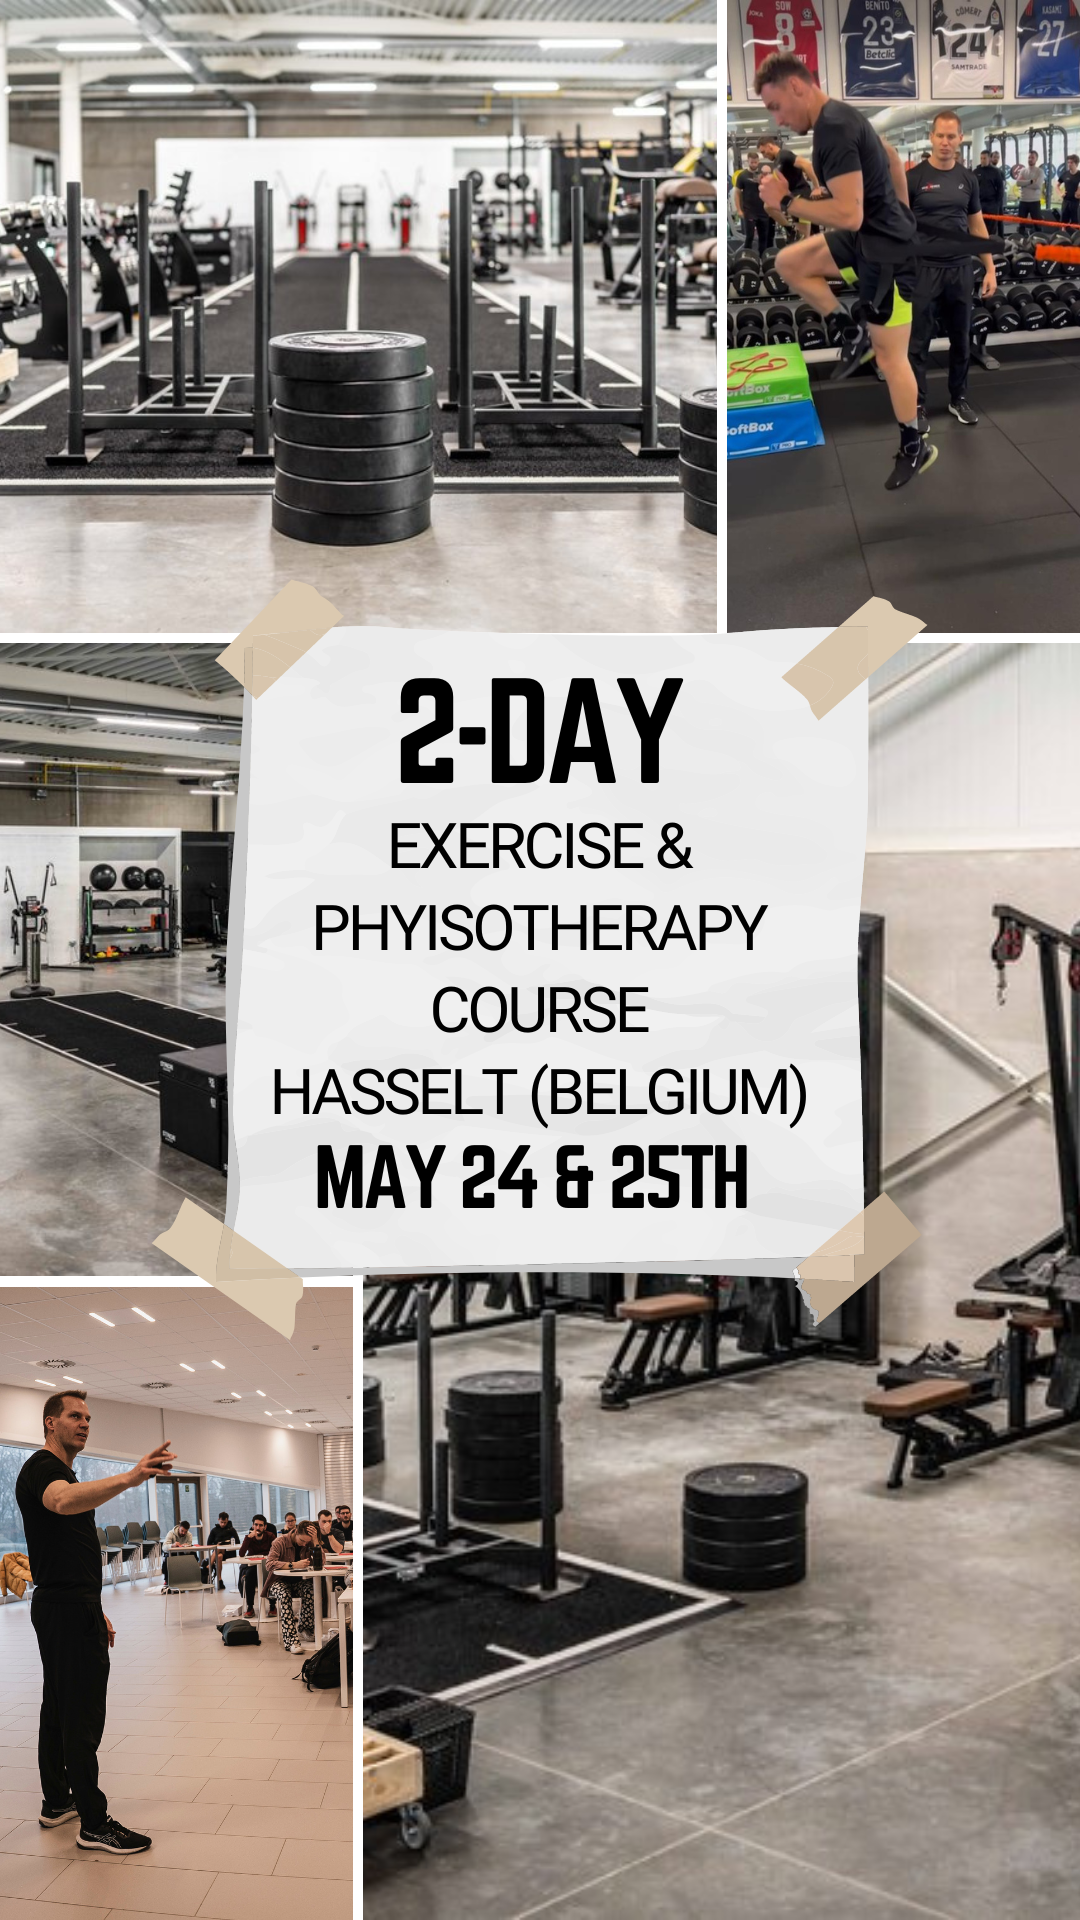 Ticket kopen voor evenement 2-Day Exercise & Physiotherapy Course (met KMO-p)